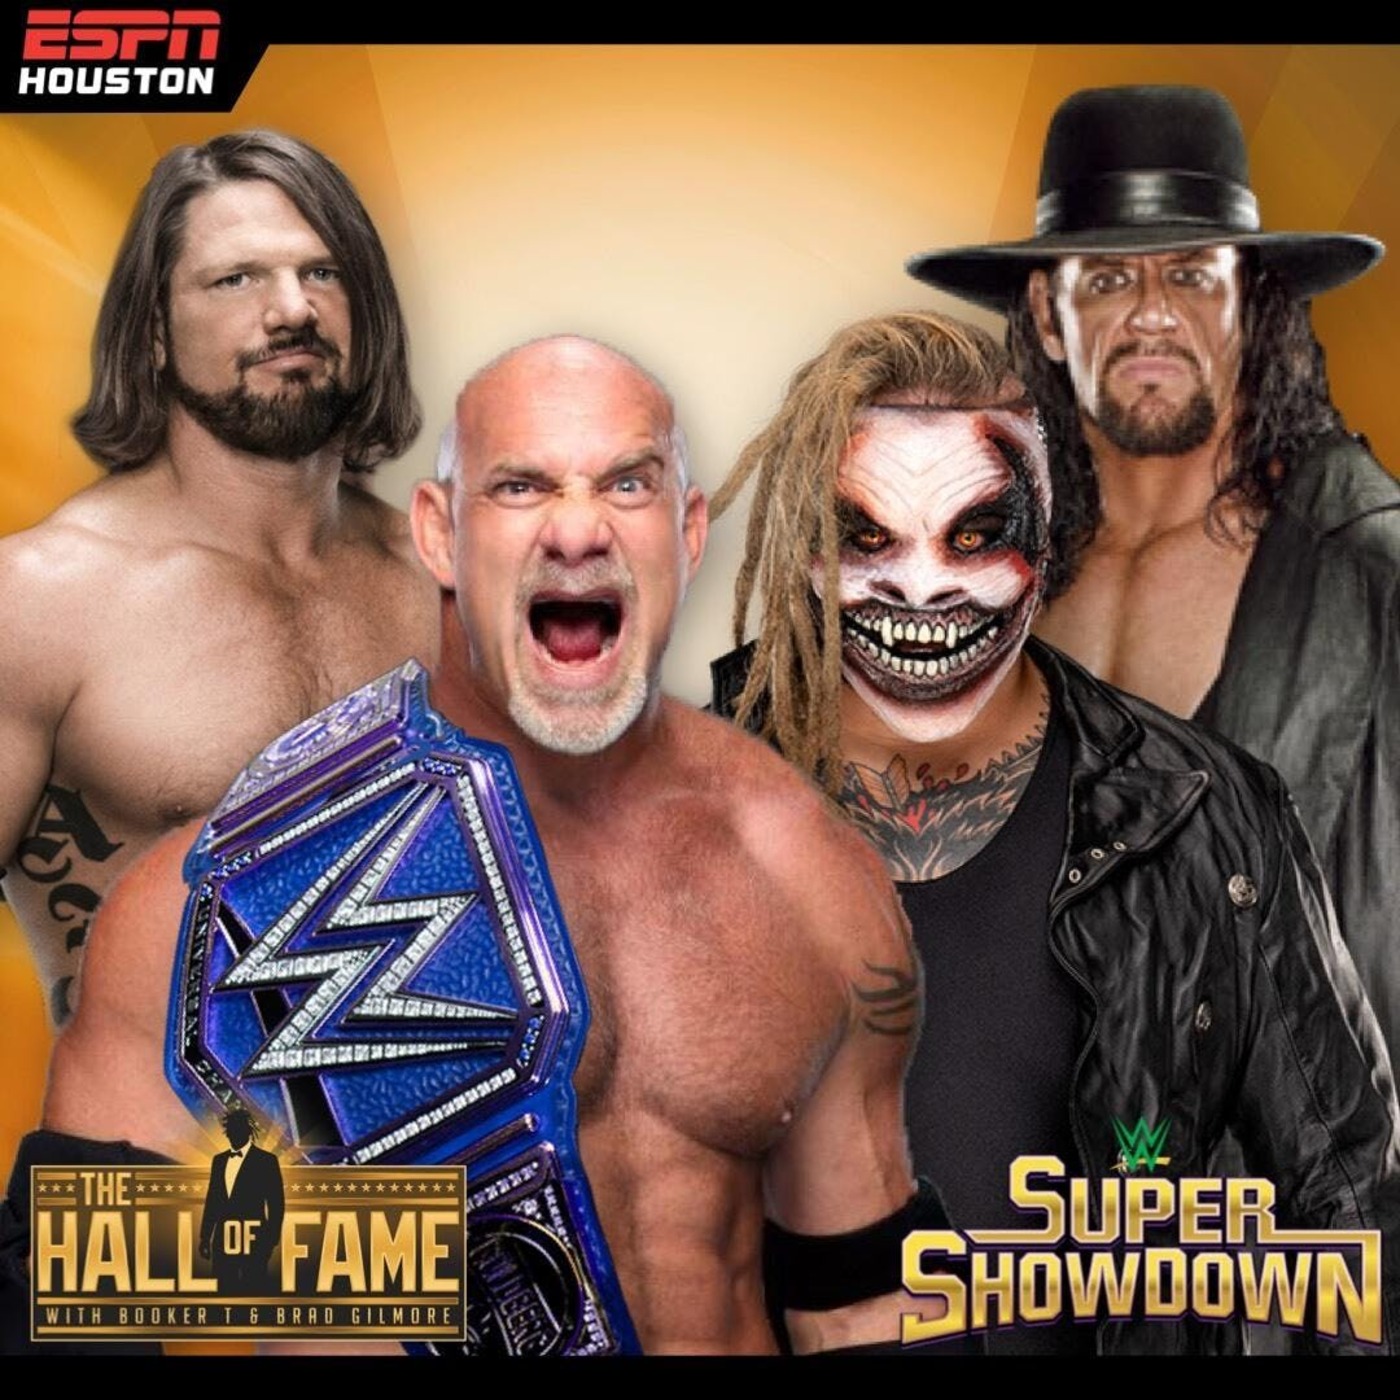 HOF129 - WWE SuperShowdown, Goldberg Wins Universal Title, Undertaker Returns